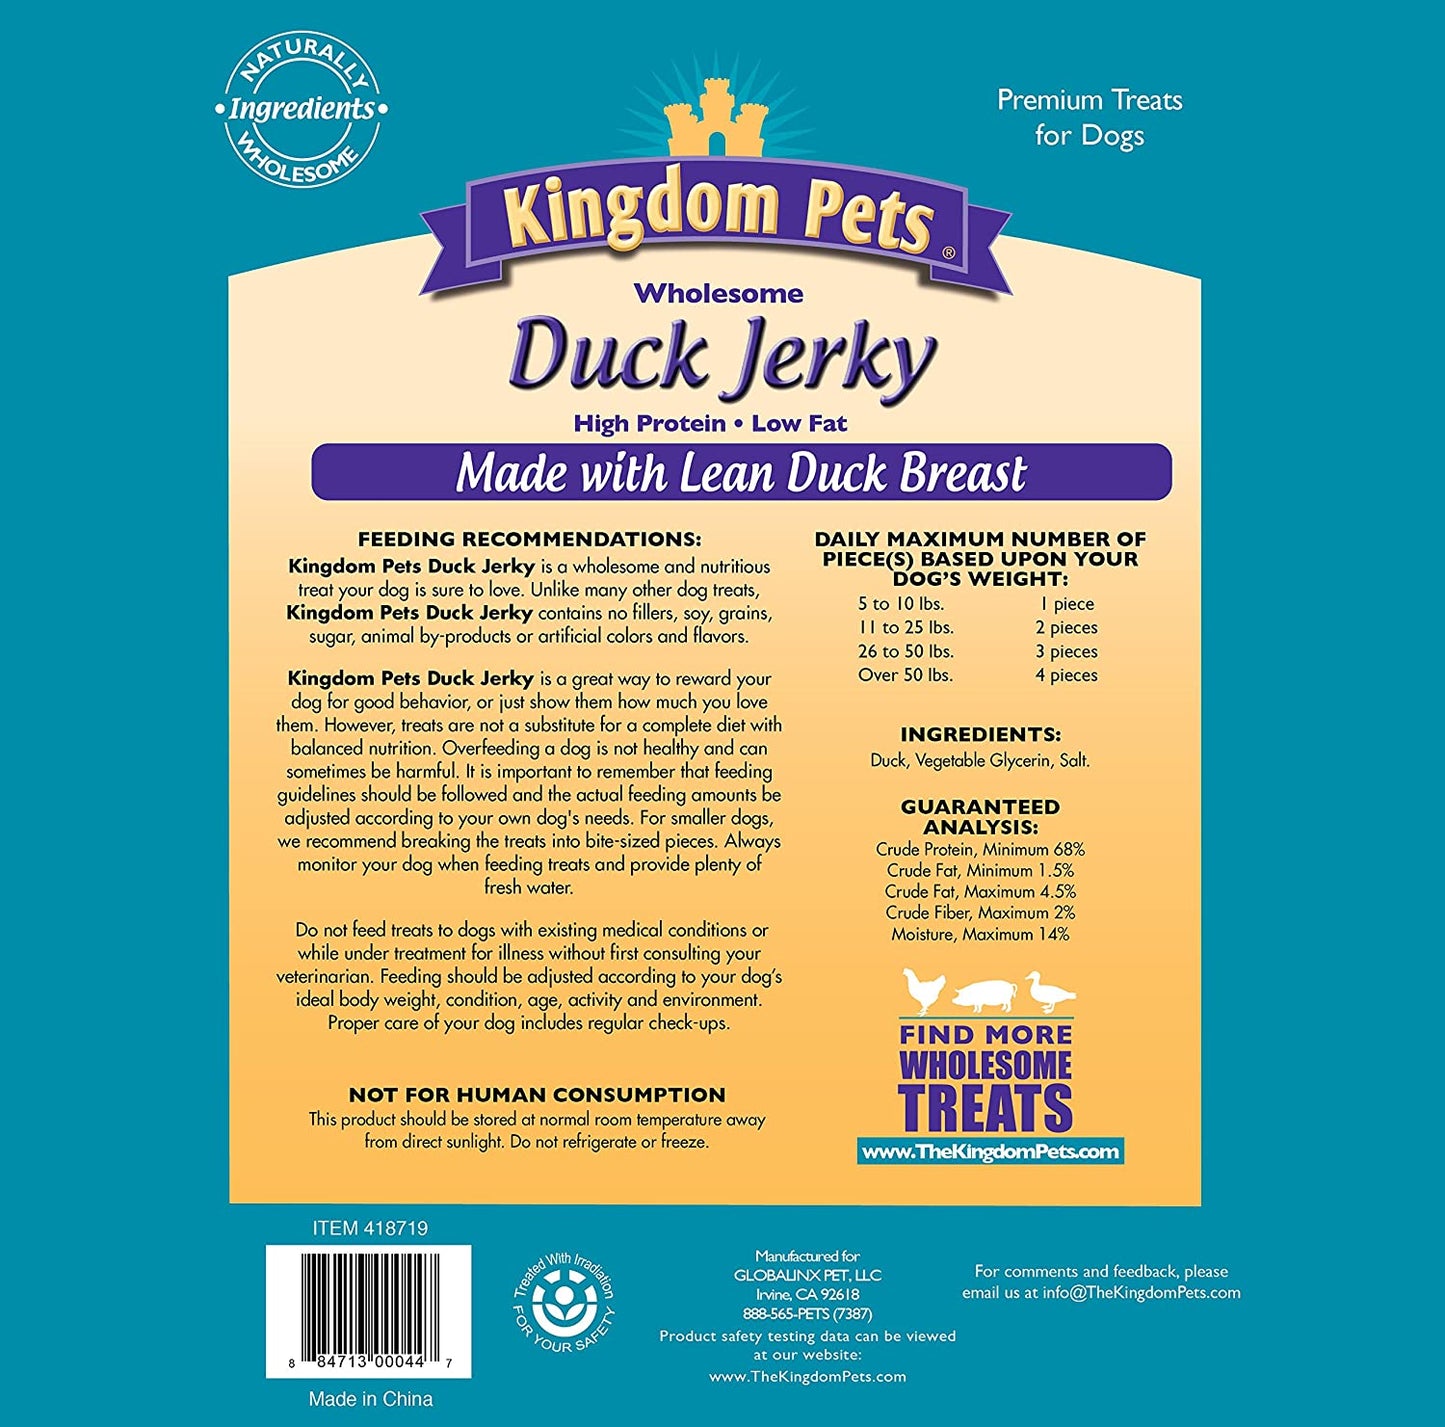 Kingdom Pets Duck Breast Jerky, Premium Treats for Dogs, 40 oz. Bag